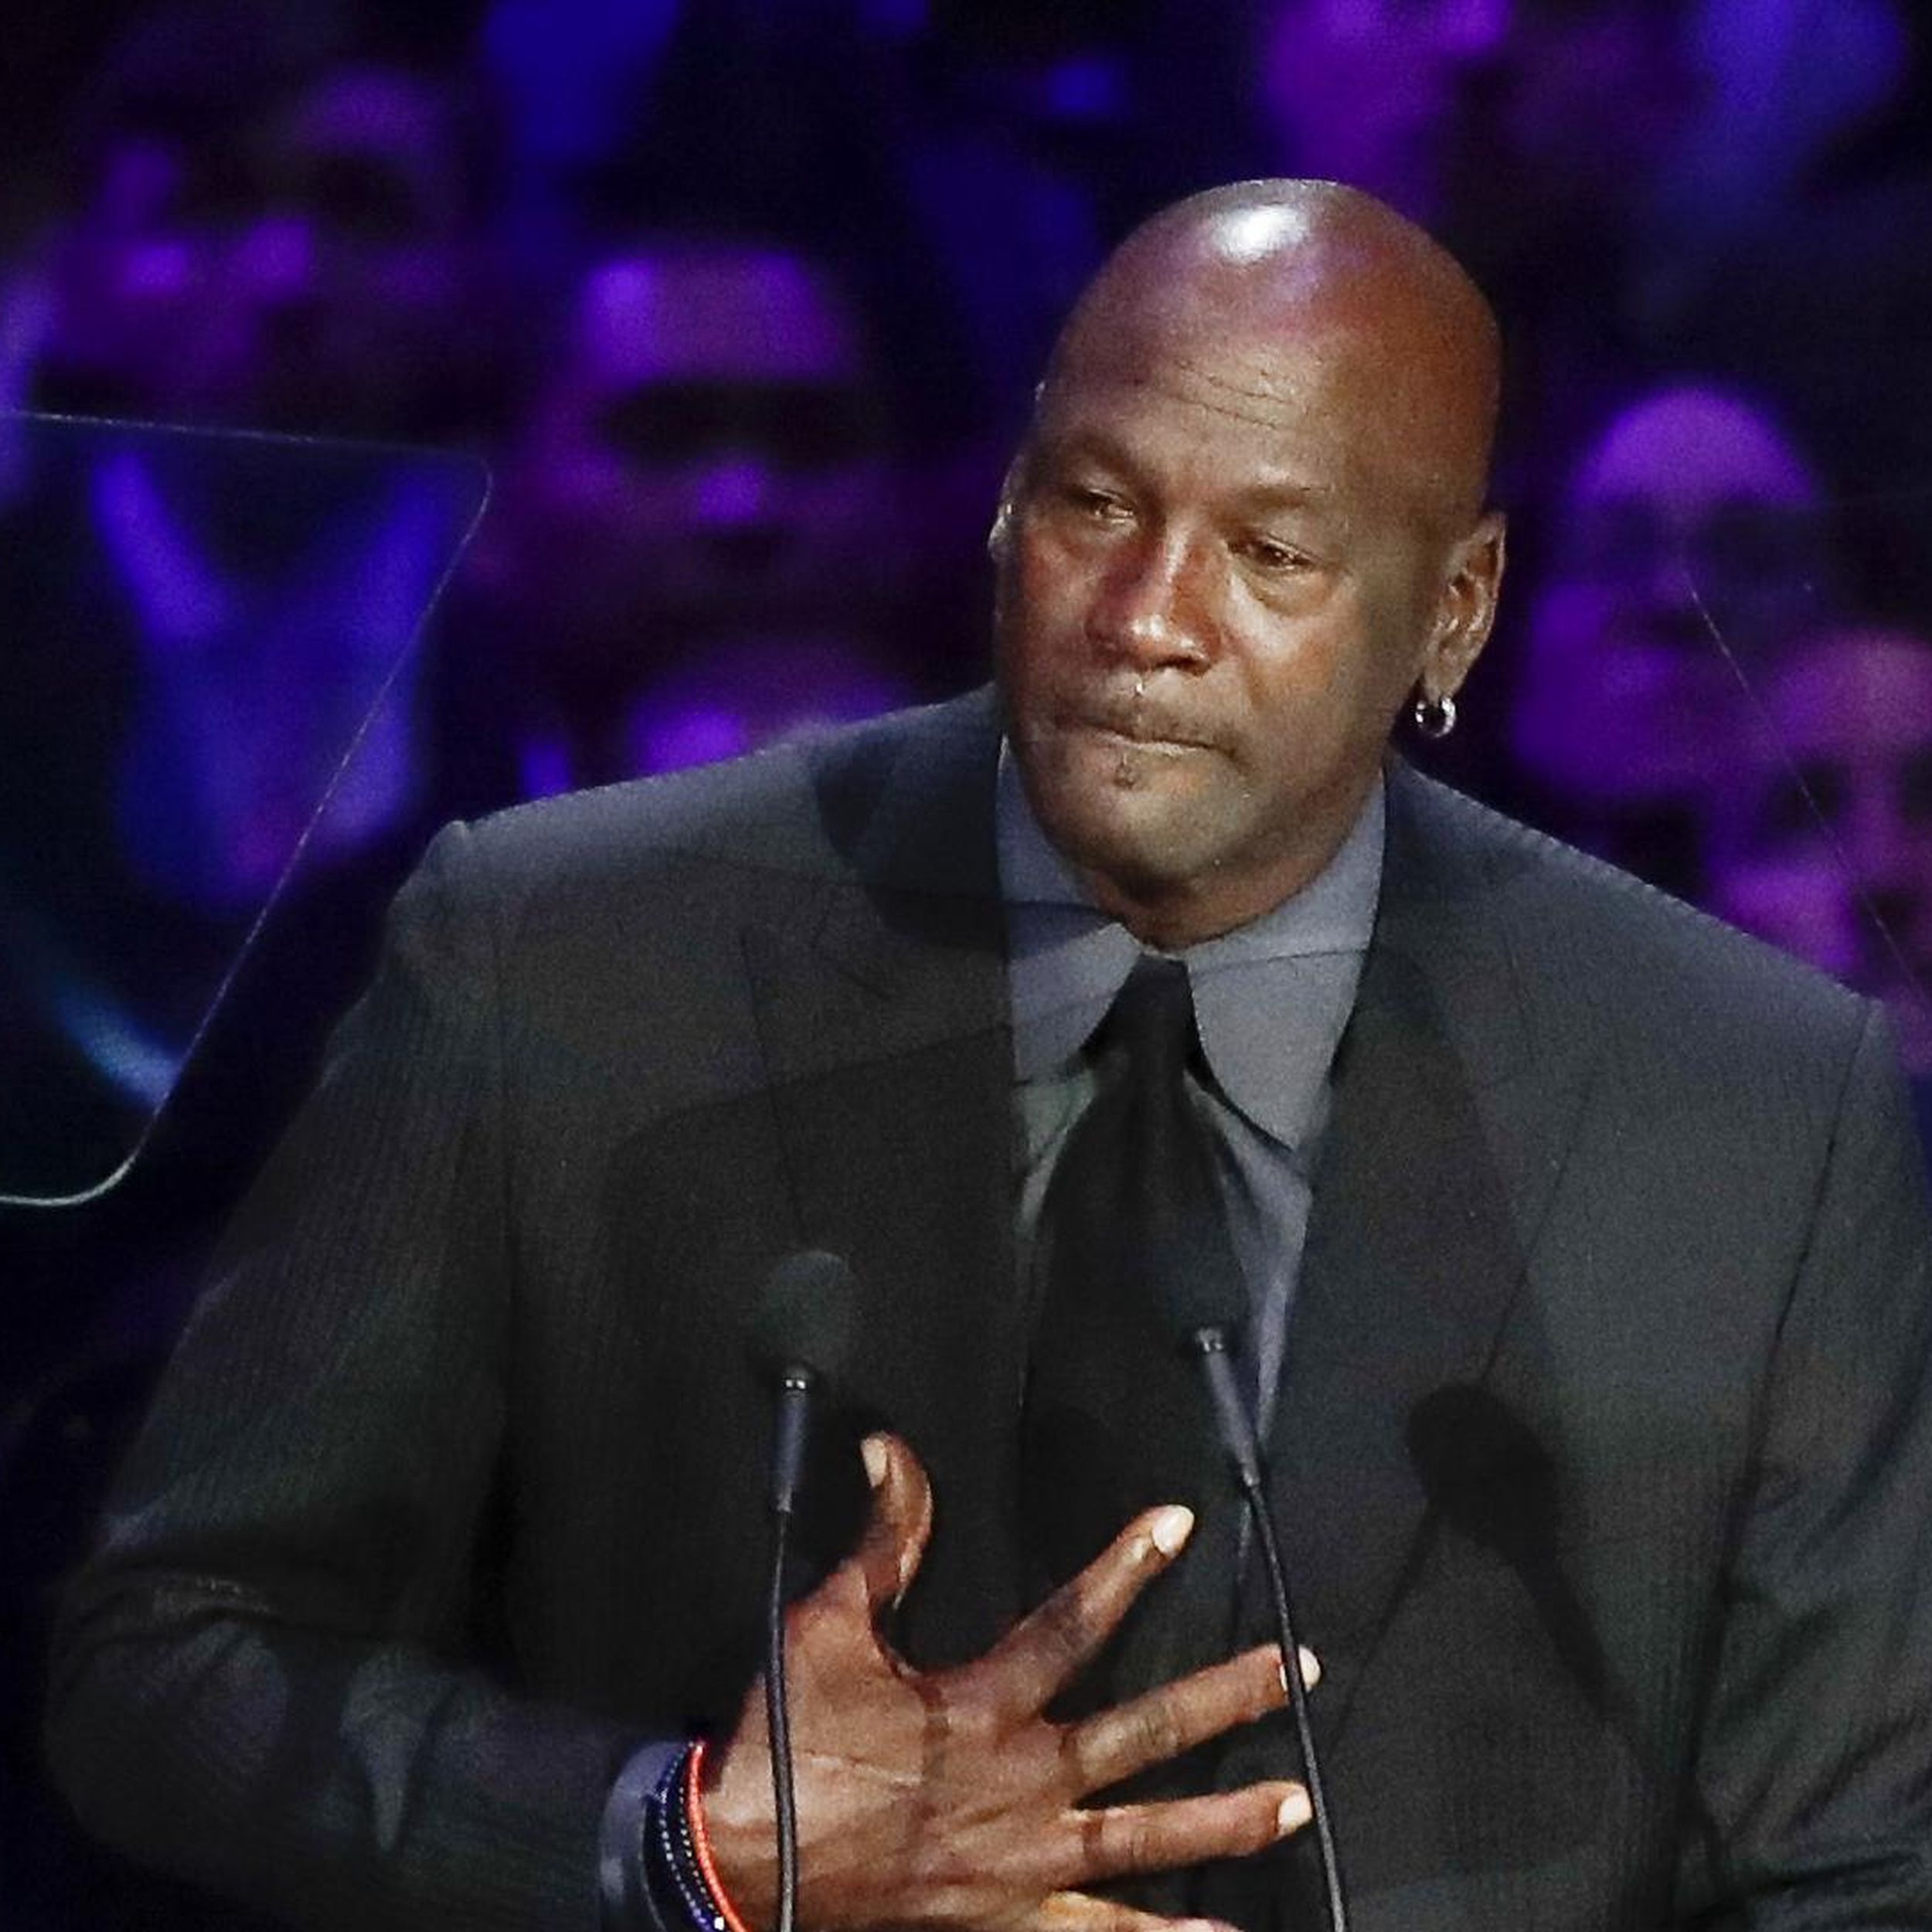 Decremento celestial mercado Michael Jordan giving $100 million for racial equality, justice | The  Spokesman-Review